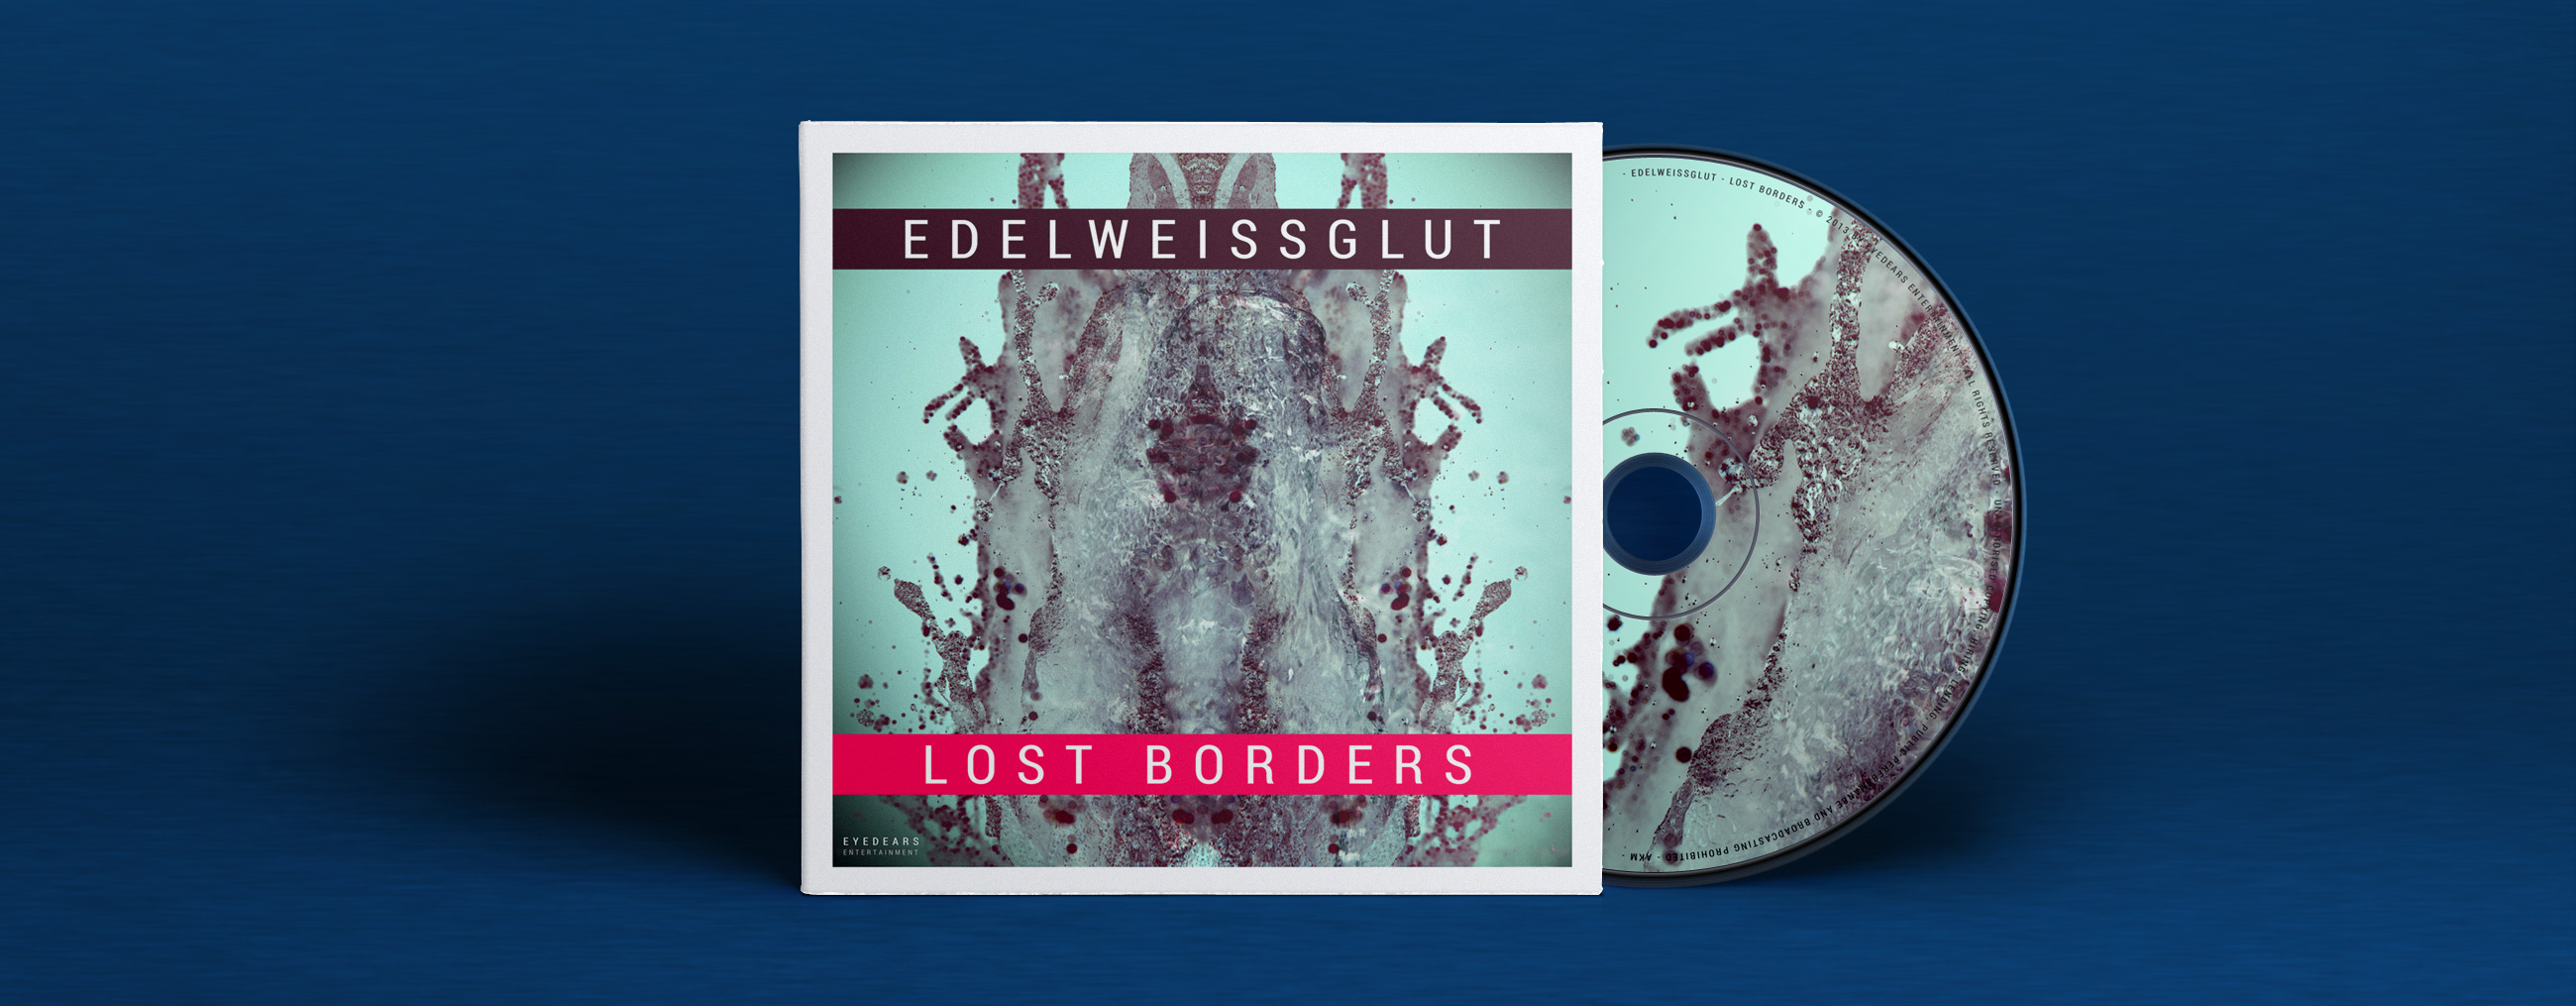 Edelweissglut - Lost Borders - Album